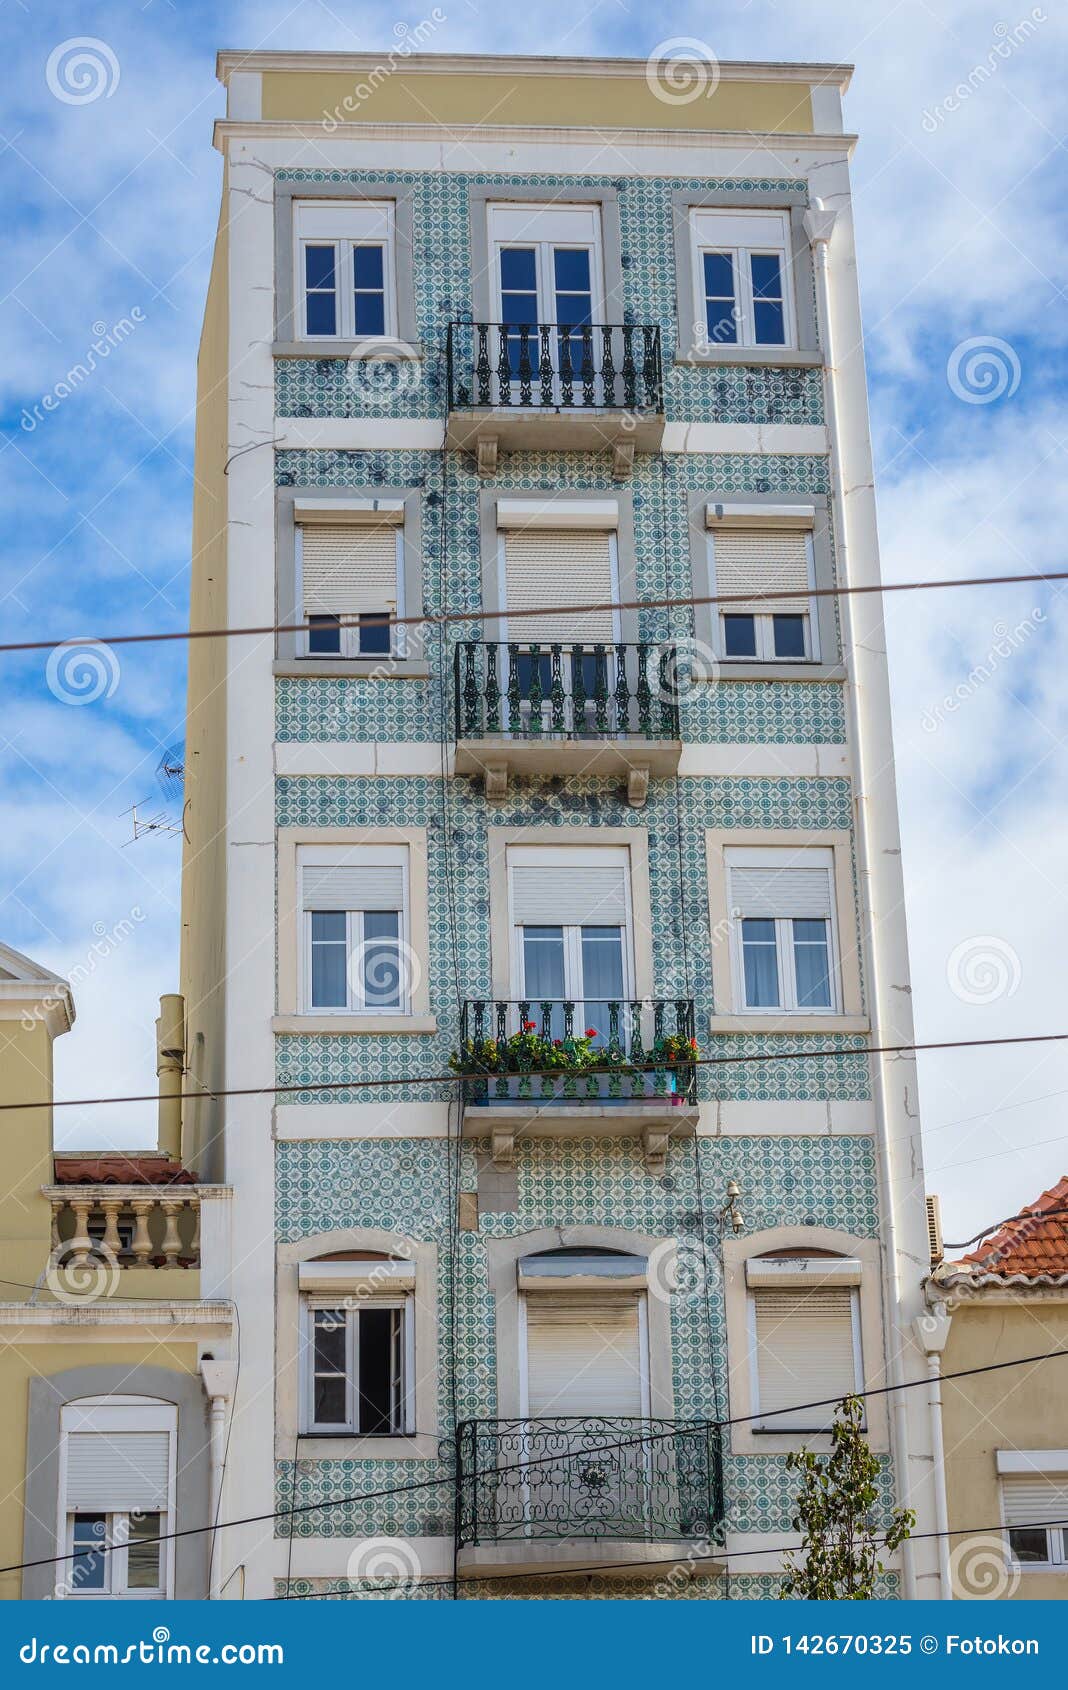 house in lisbon